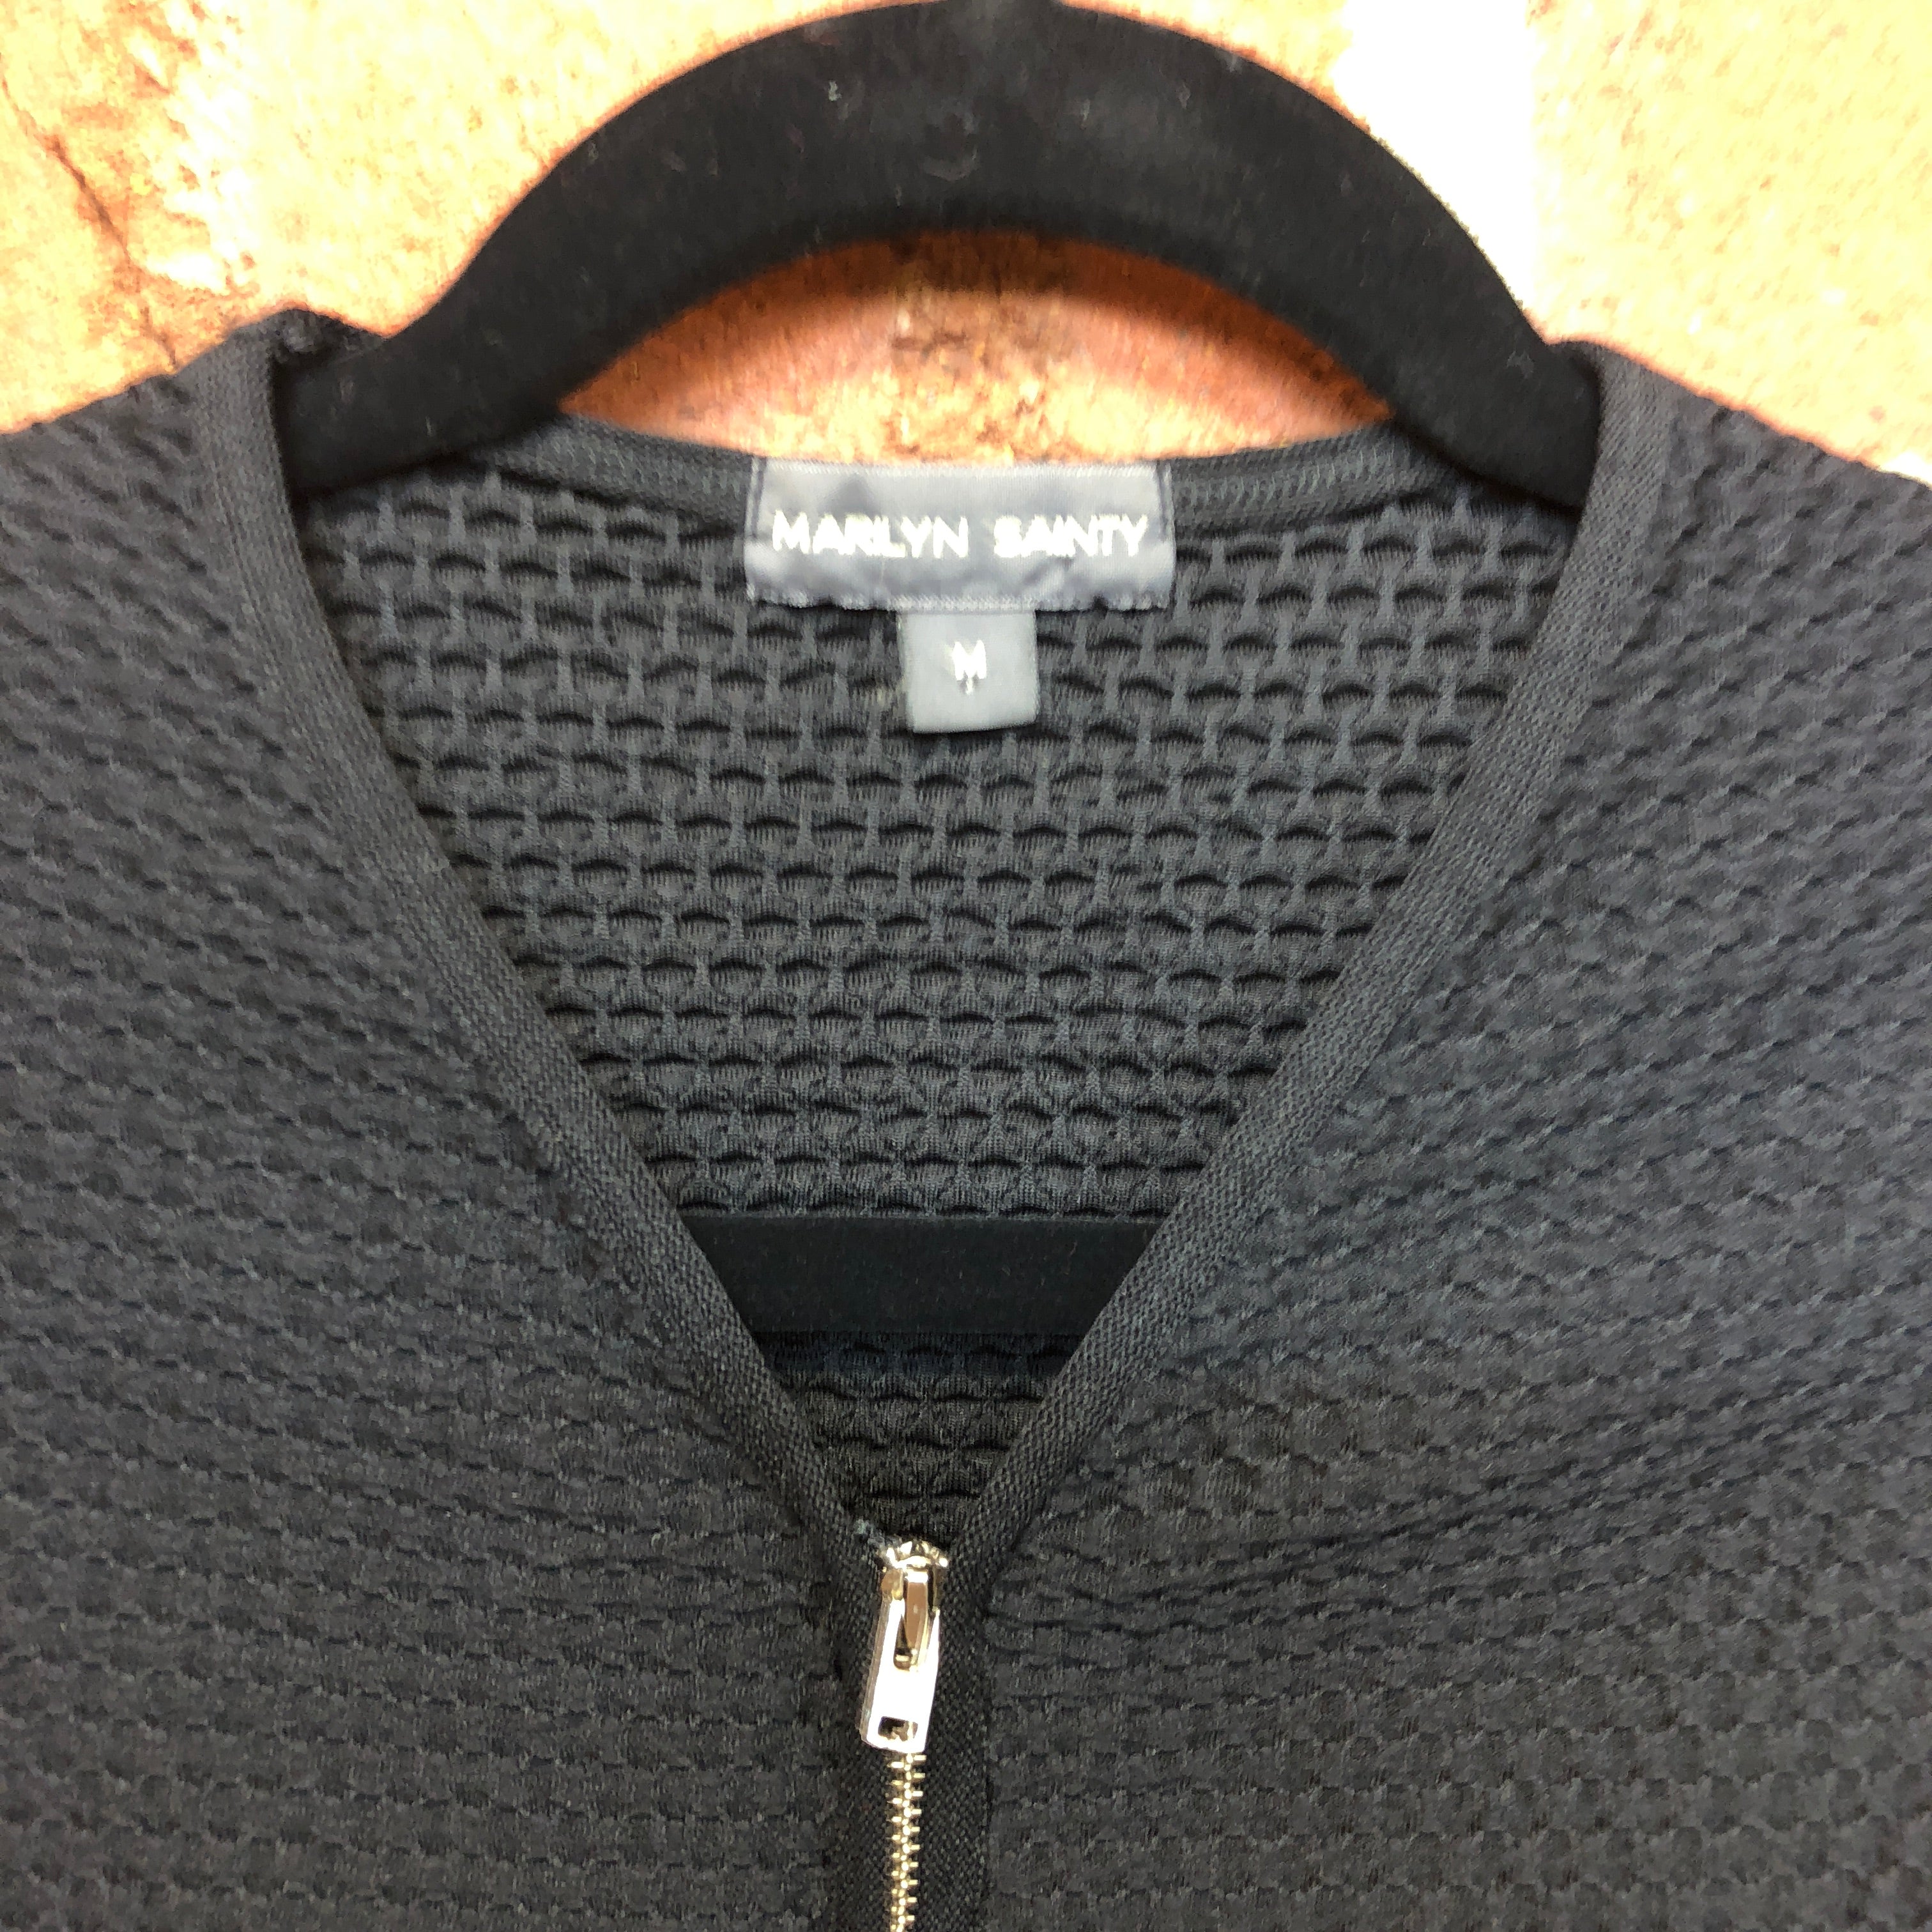 MARILYN SAINTY textured zip front jacket